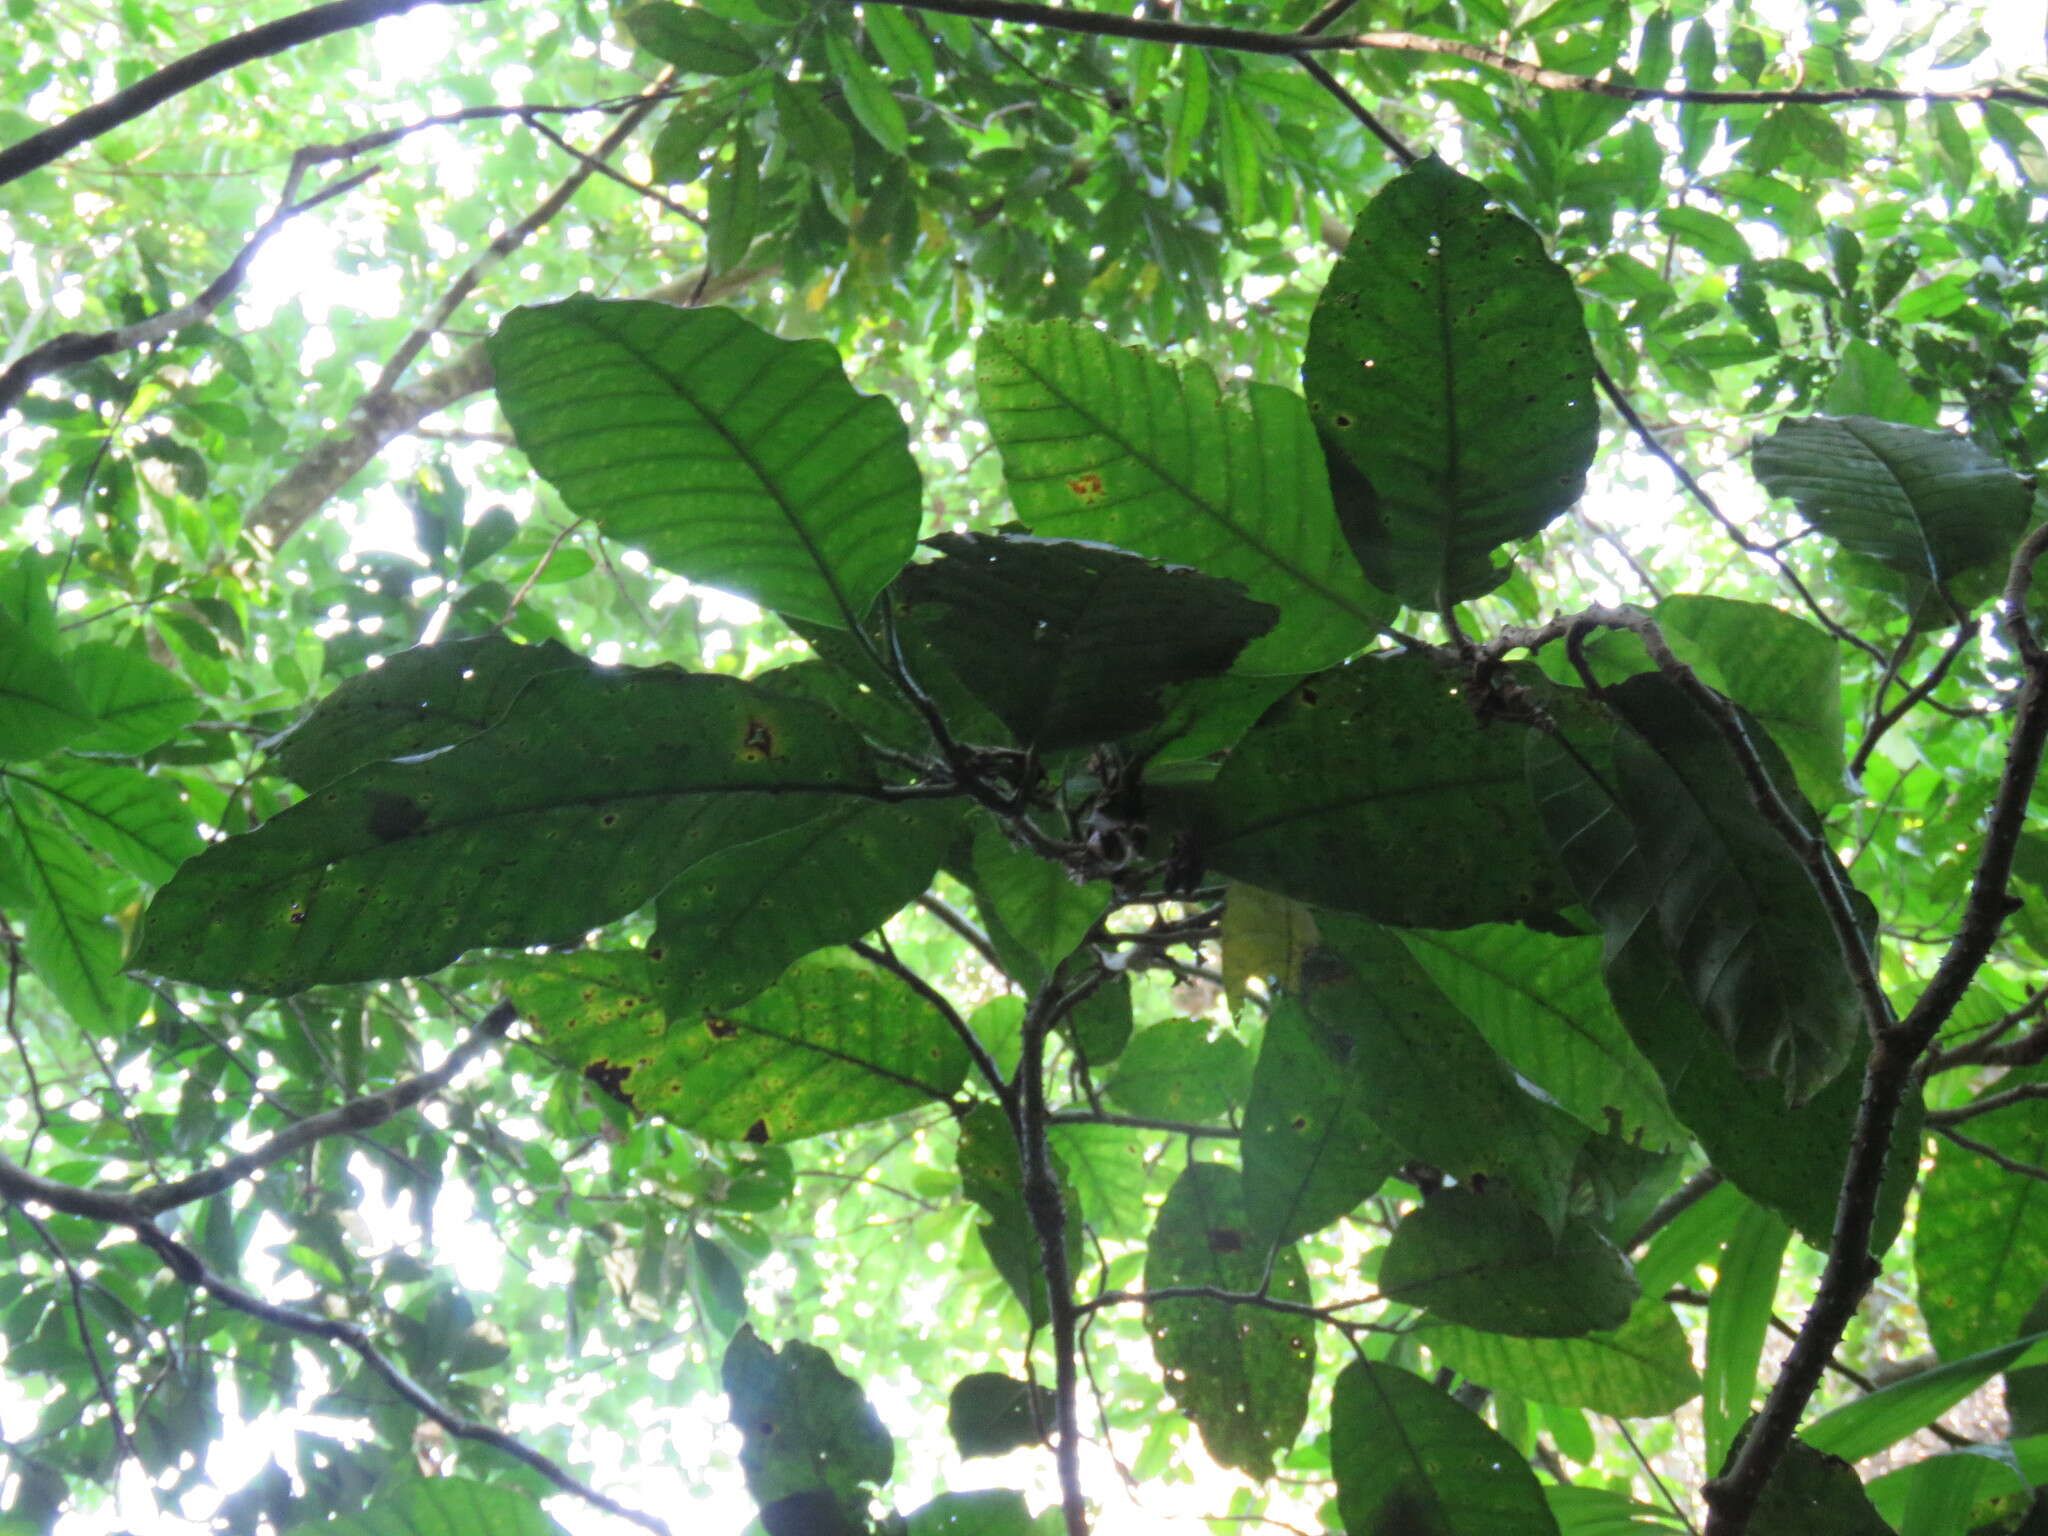 Image of Poulsenia armata (Miq.) Standl.